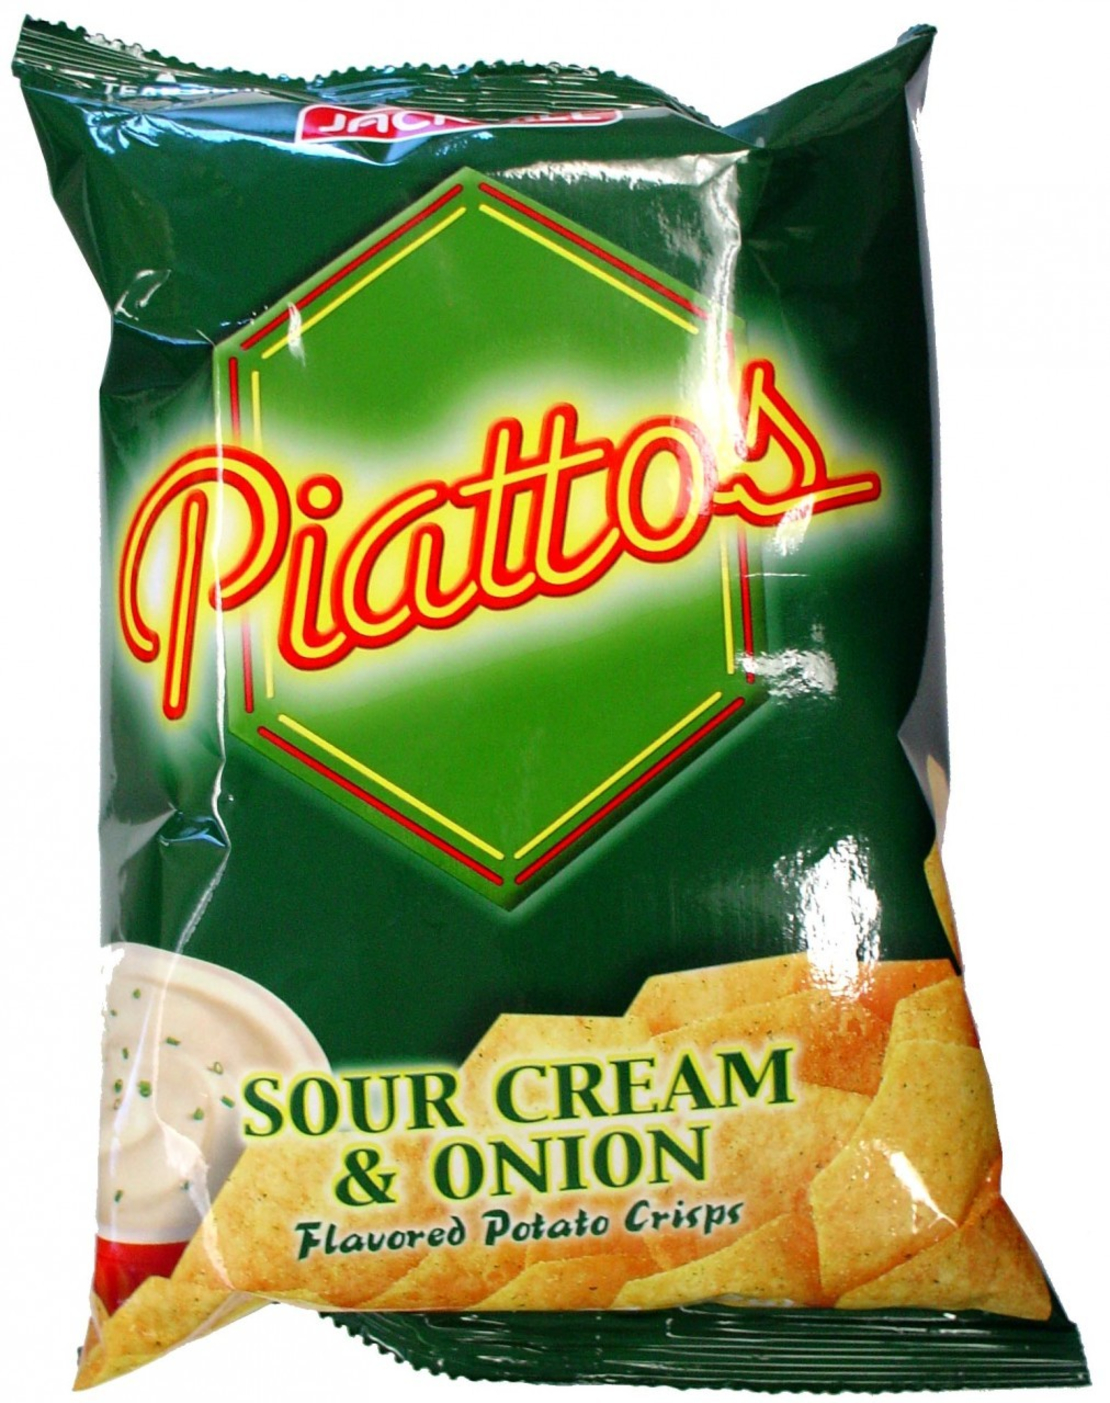 Piattos - Sour Cream & Onion Flavored Potato Chrisps